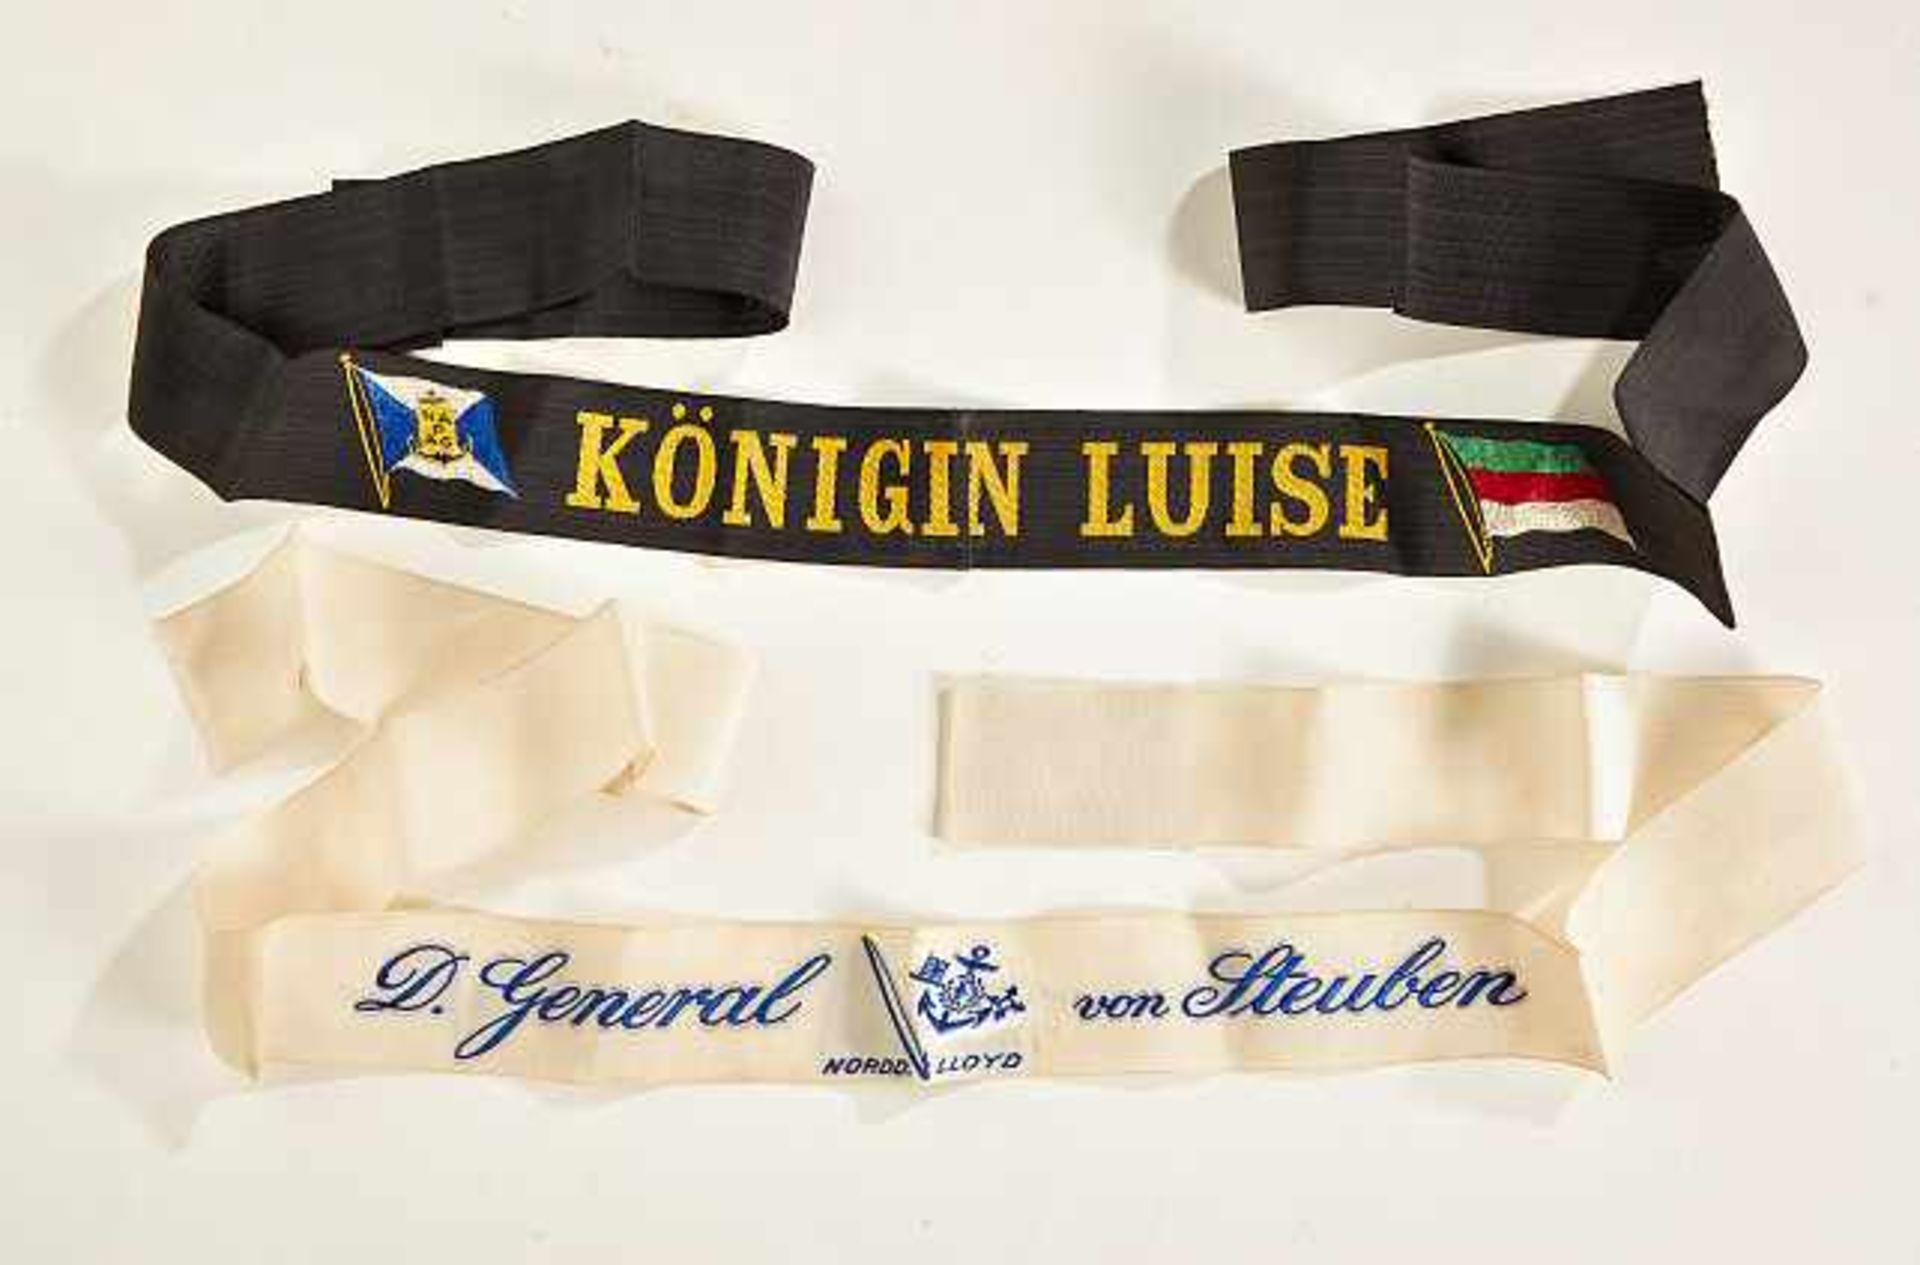 Weimarer Republik - Reichswehr : Navy Cap Bands.Lot consists of two navy cap bands: Königin Luise